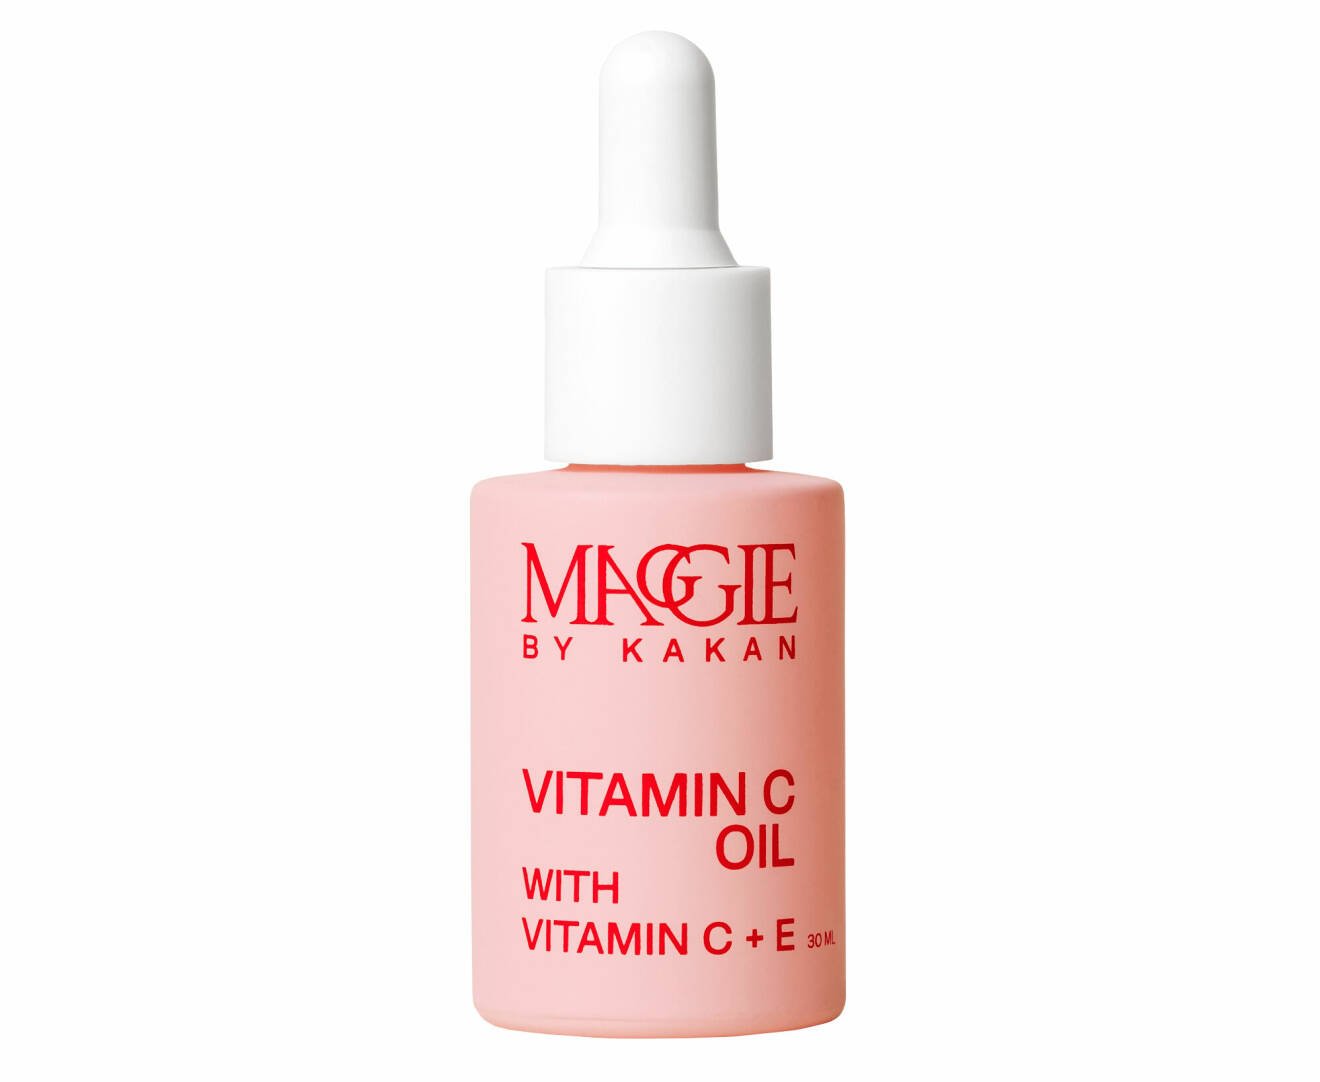 Vitamin C Oil, Maggie by Kakan